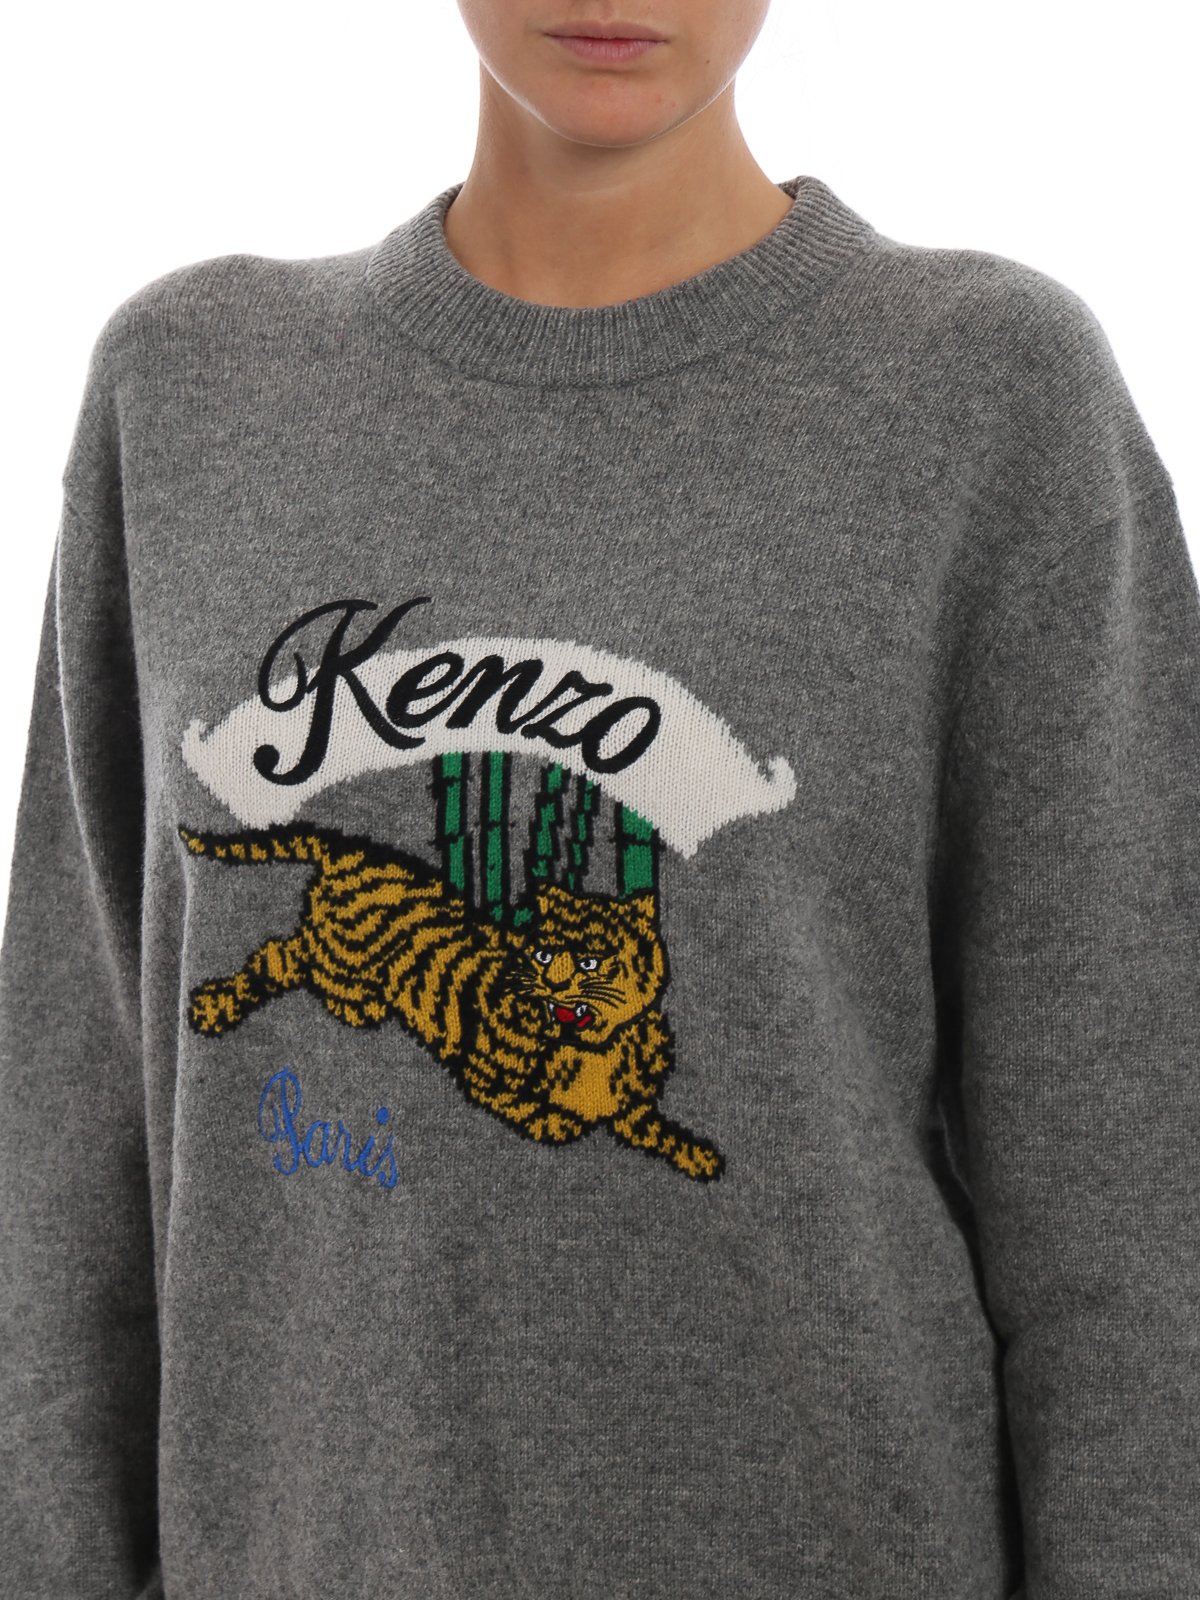 kenzo jumping tiger jumper